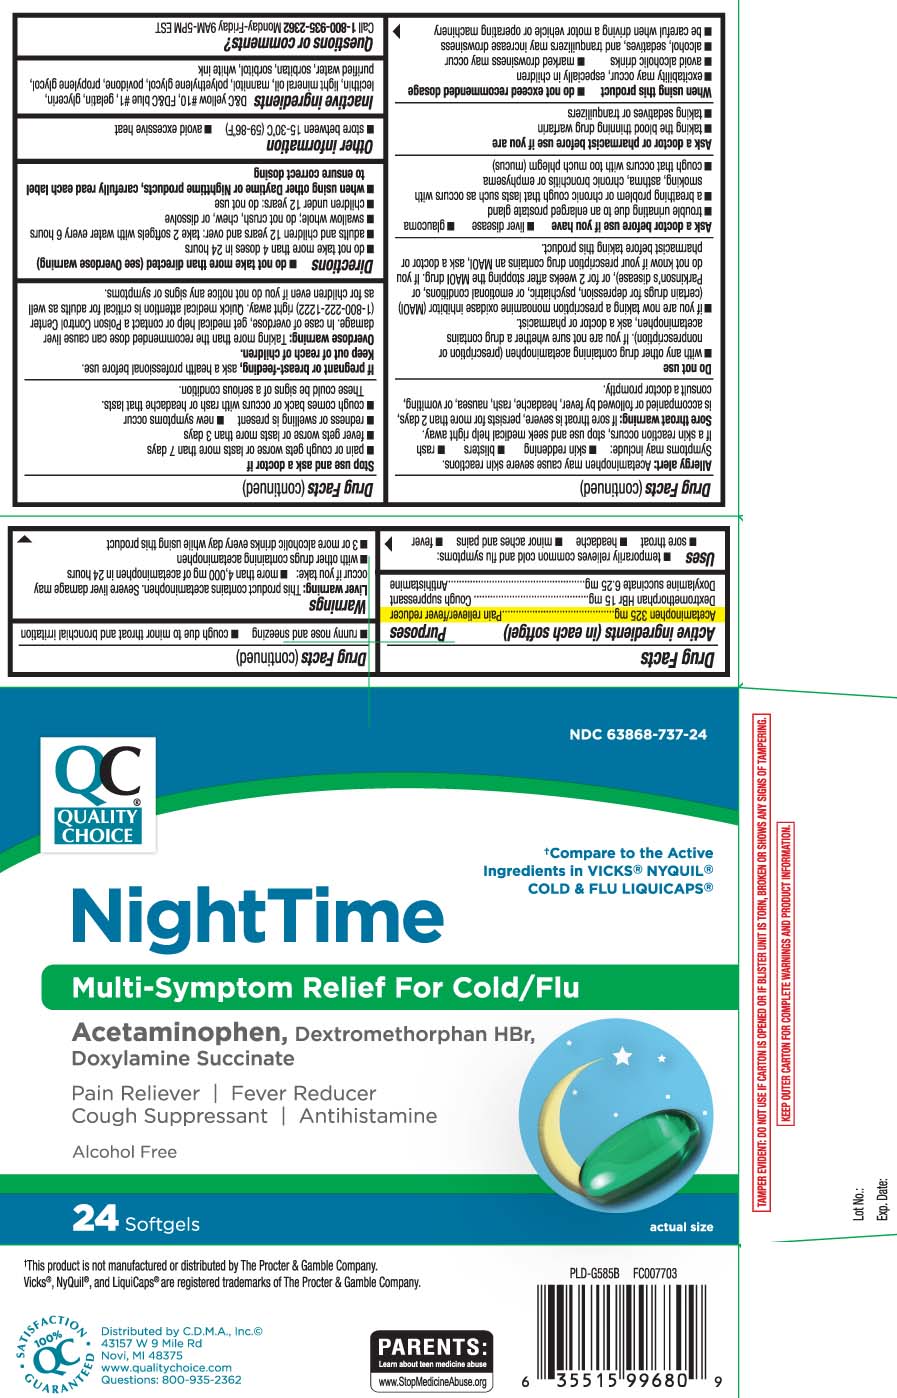 Acetaminophen 325 mg, Dextromethorphan HBr15 mg, Doxylamine Succinate 6.25 mg